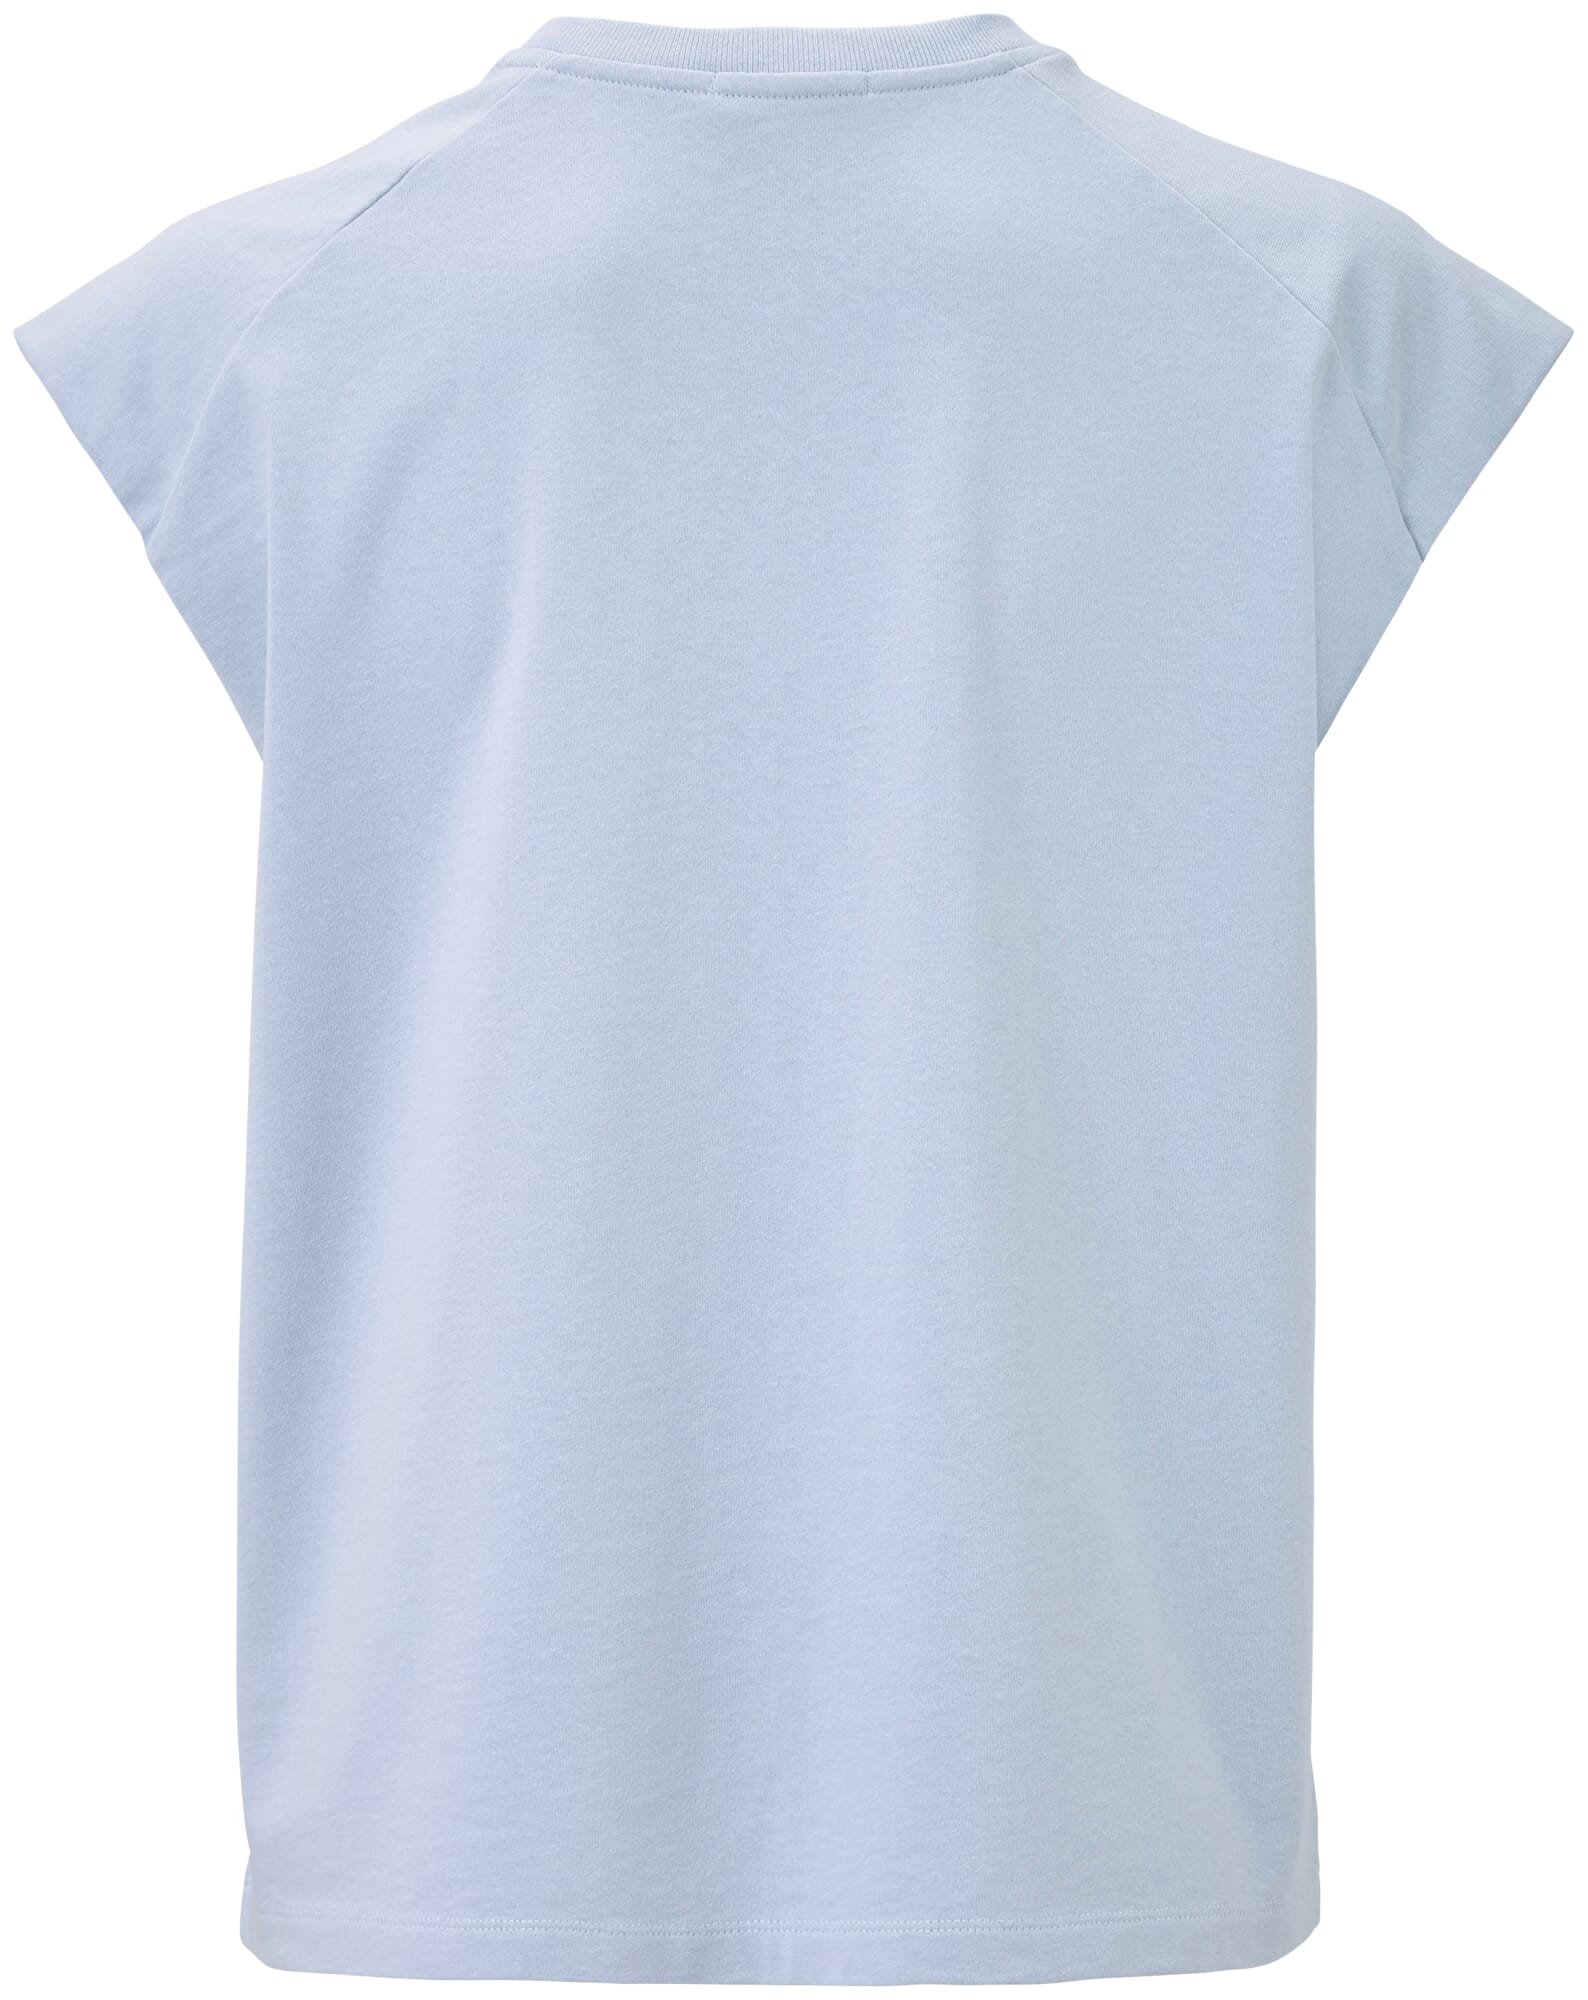 Manufactum Baumwolle, Bleu | Damen-T-Shirt